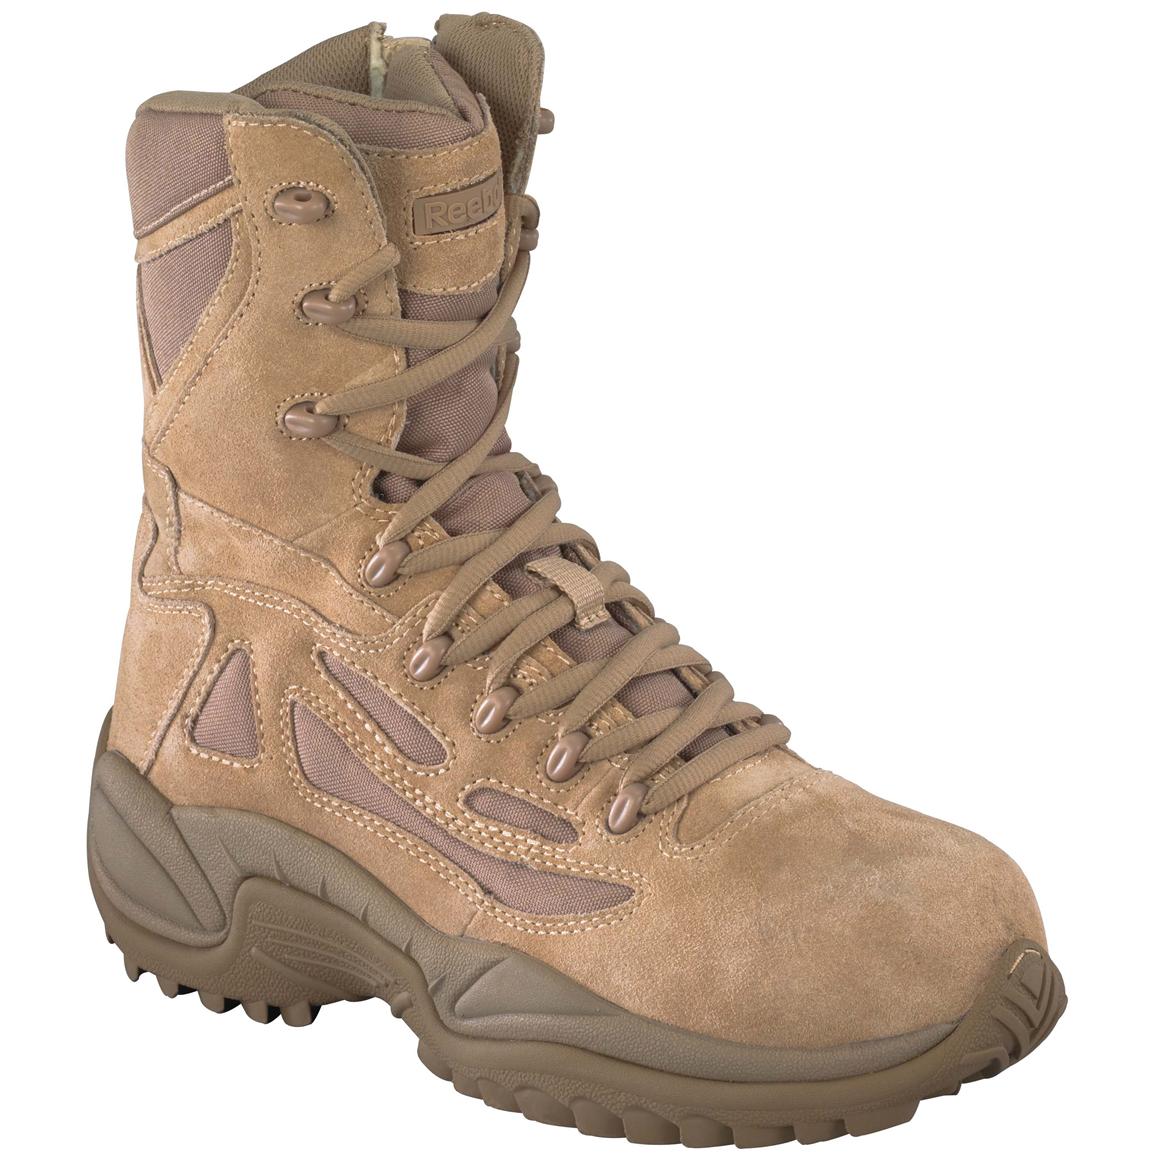 Men's Reebok 8" Composite Toe Side-Zip Stealth Work Boots, Desert Tan